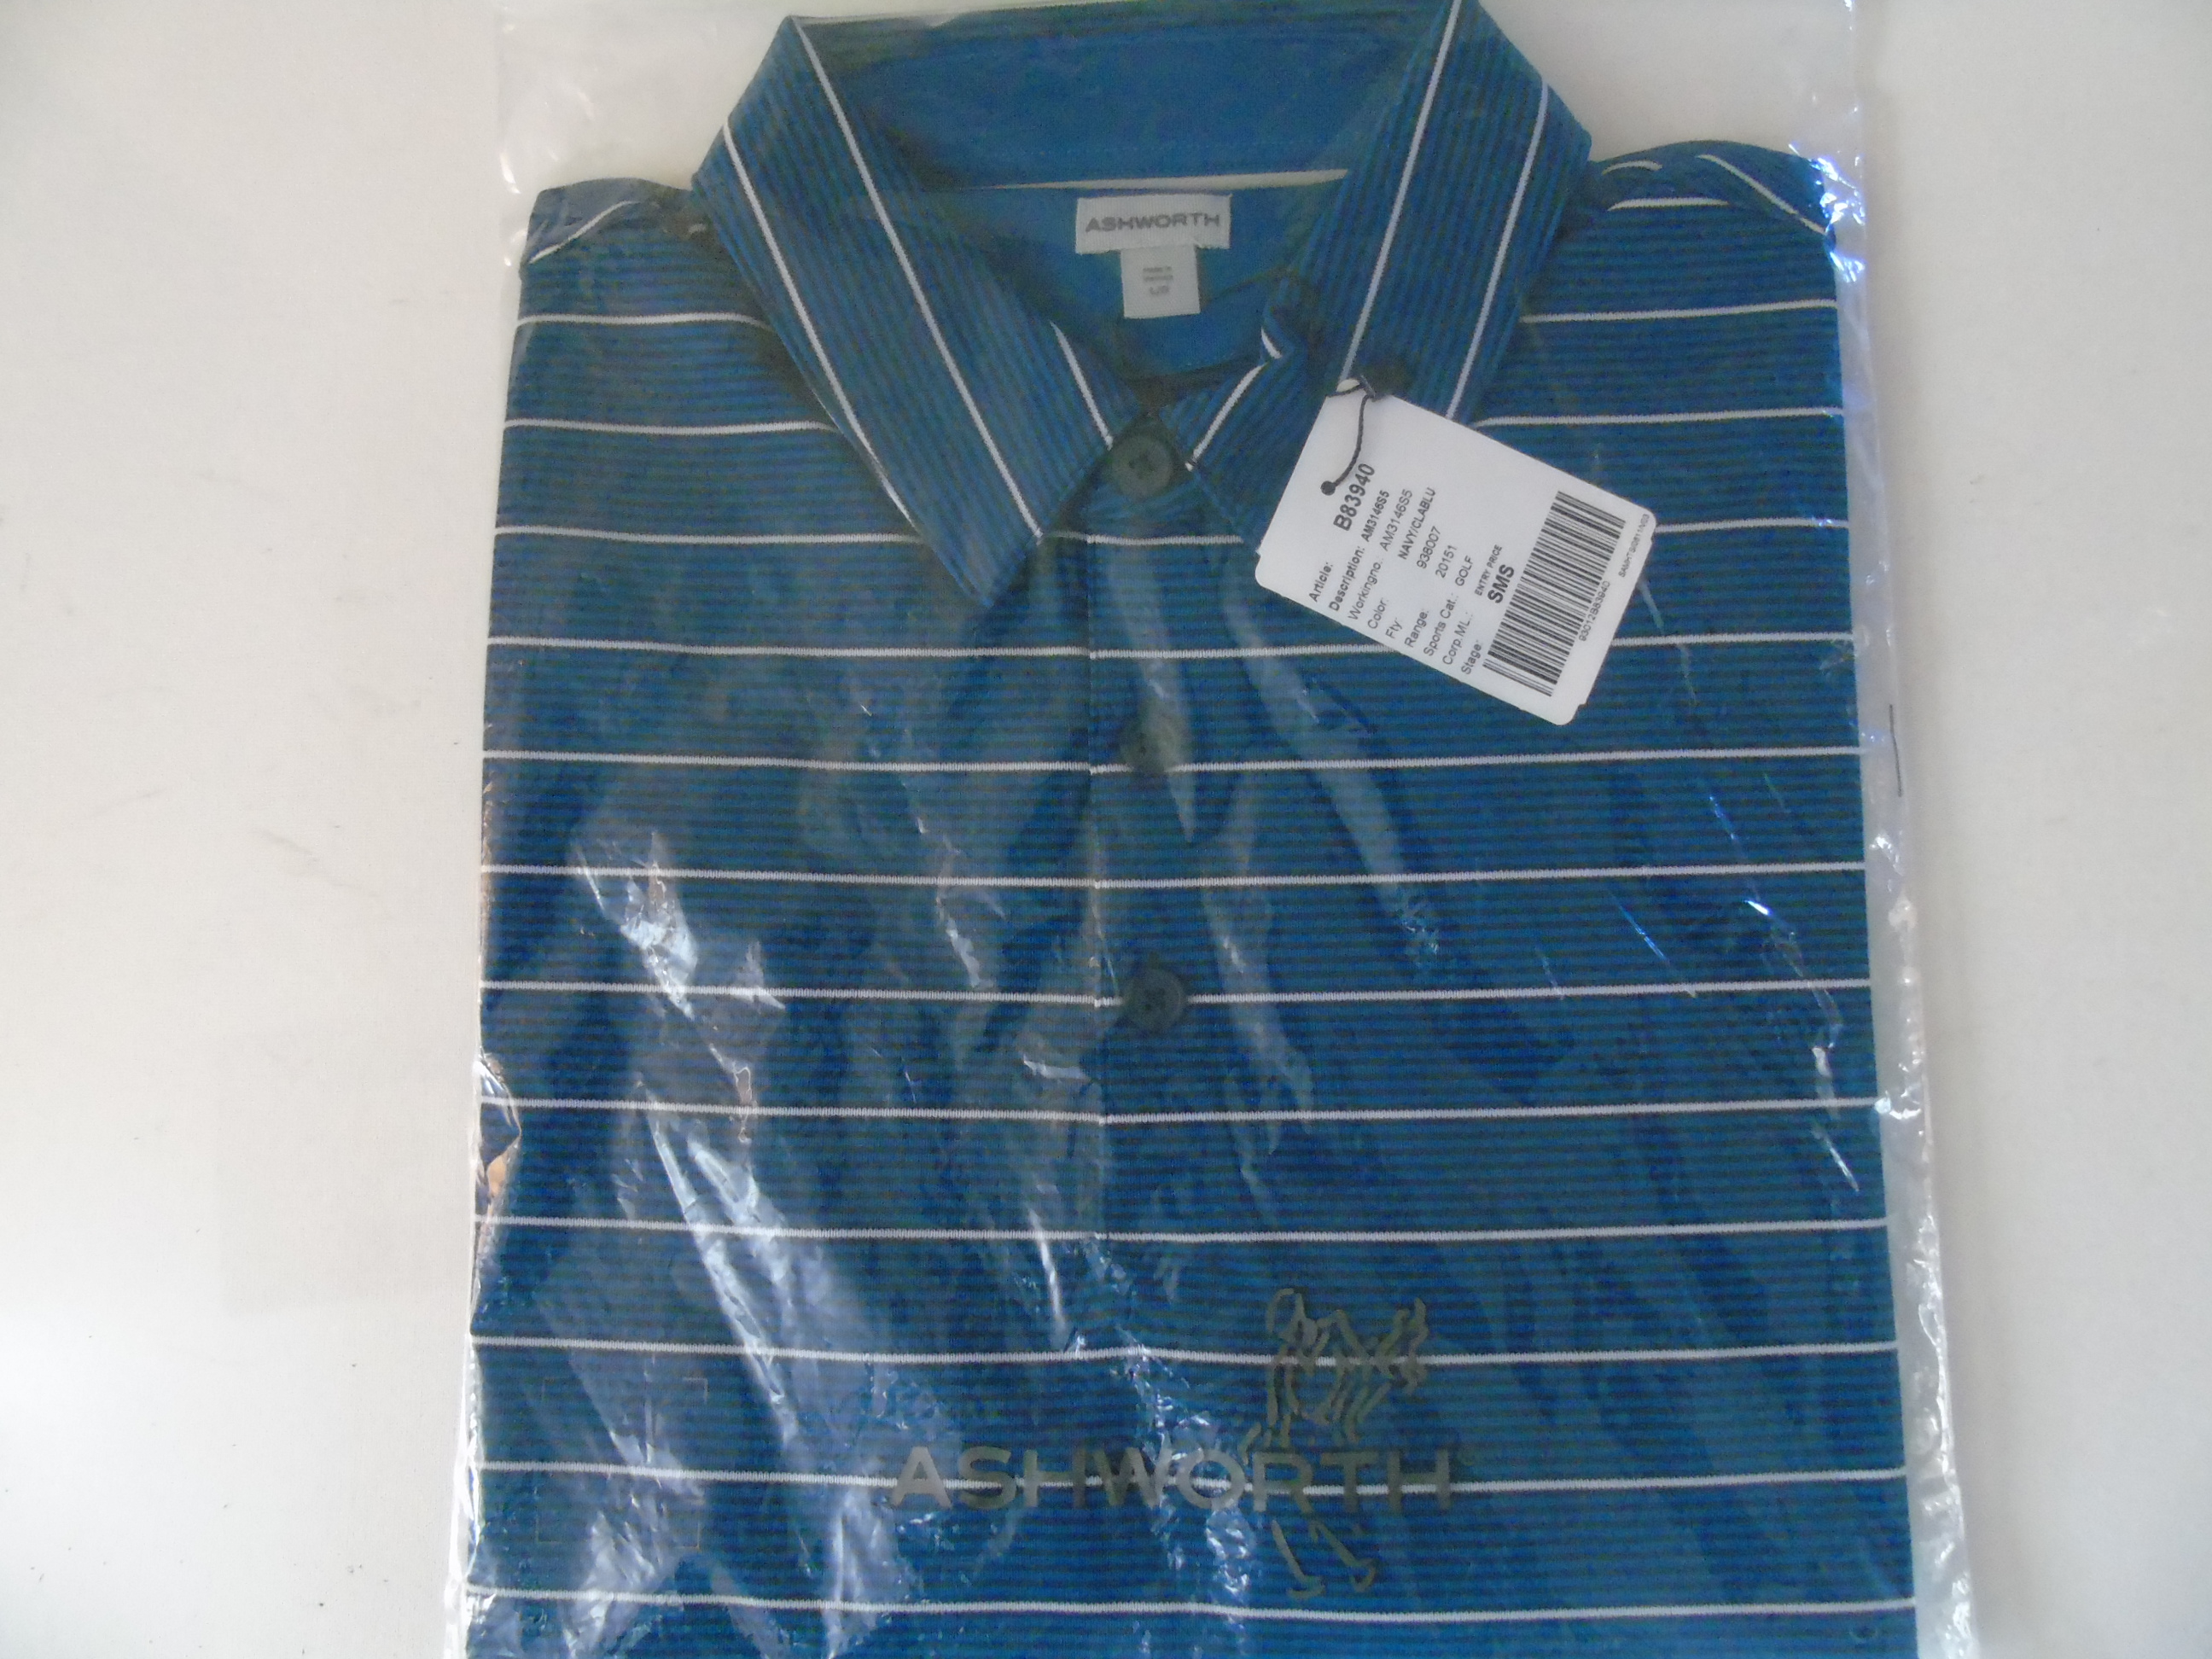 Golf Job Lot Shirts 3 Ashworth Shirts size Large Brand new